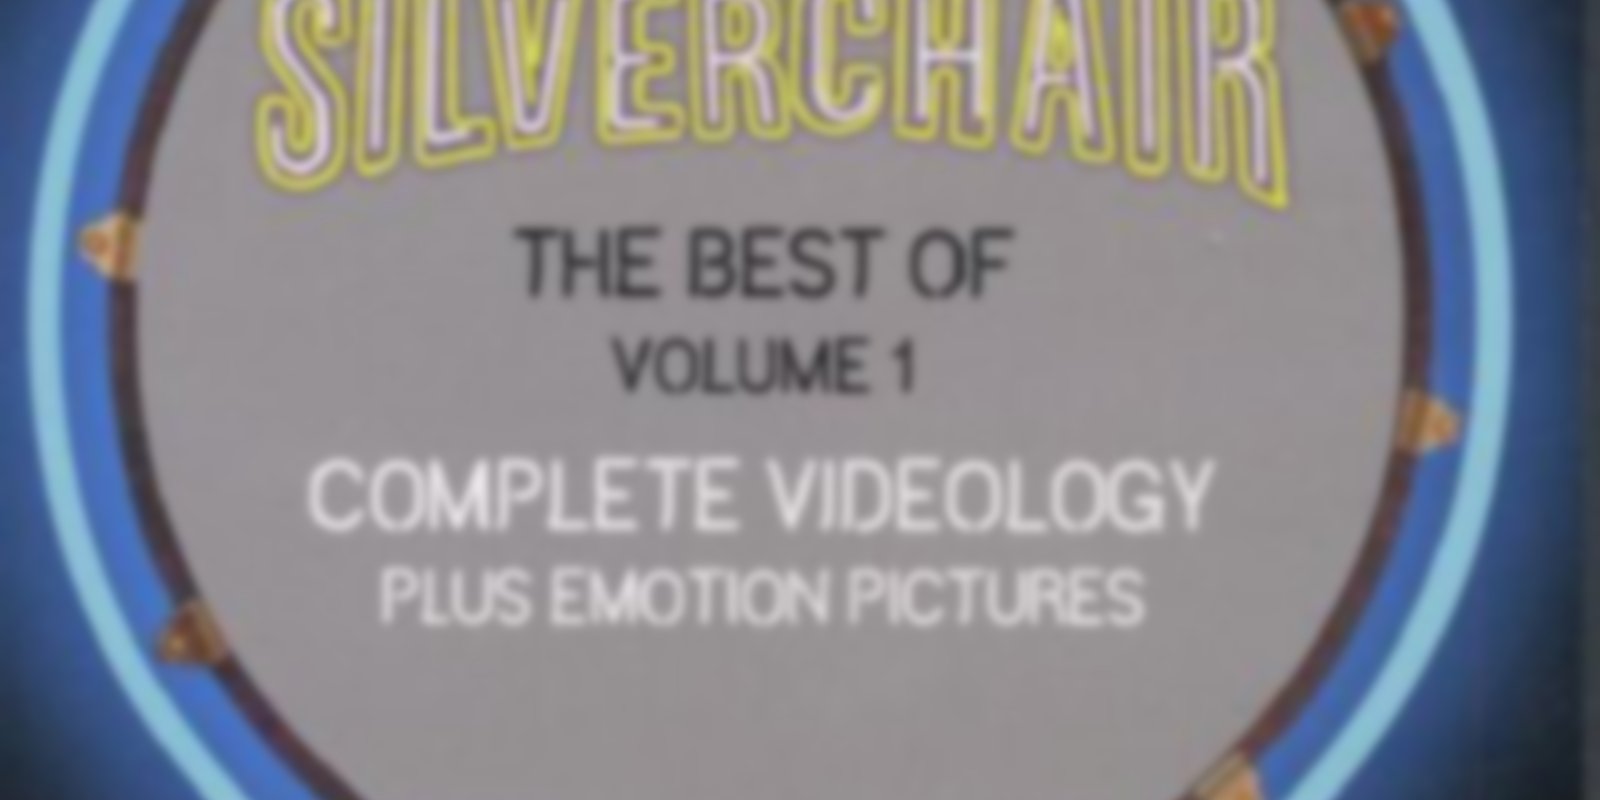 Silverchair - The Best of Volume 1